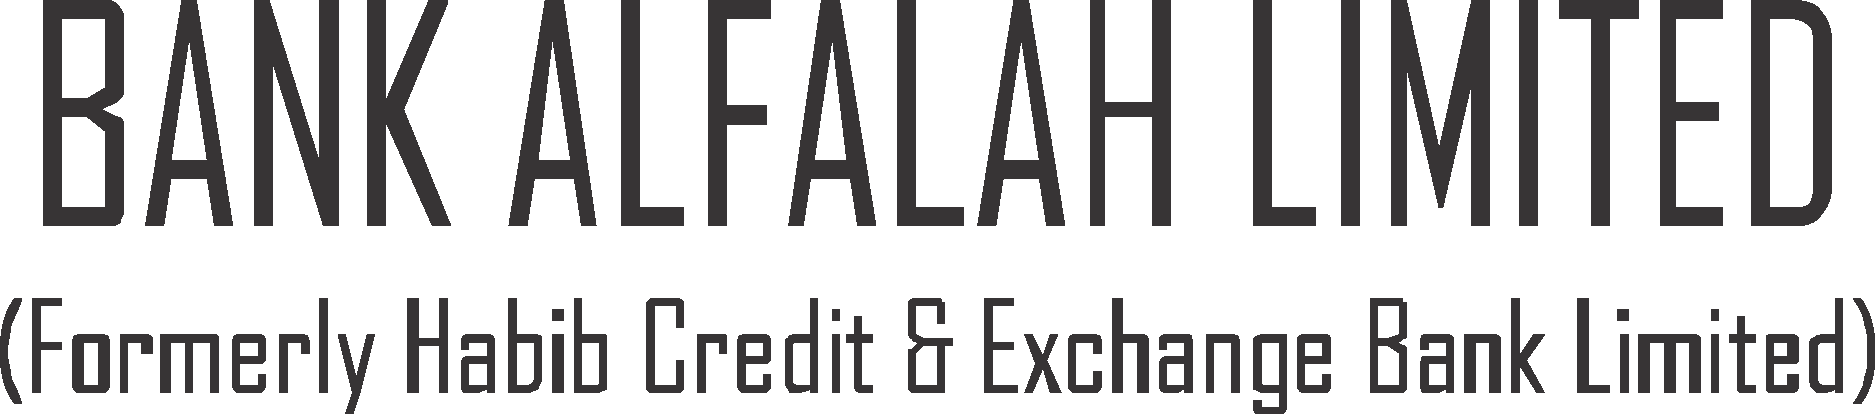 BANK AL FALAH Logo Vector